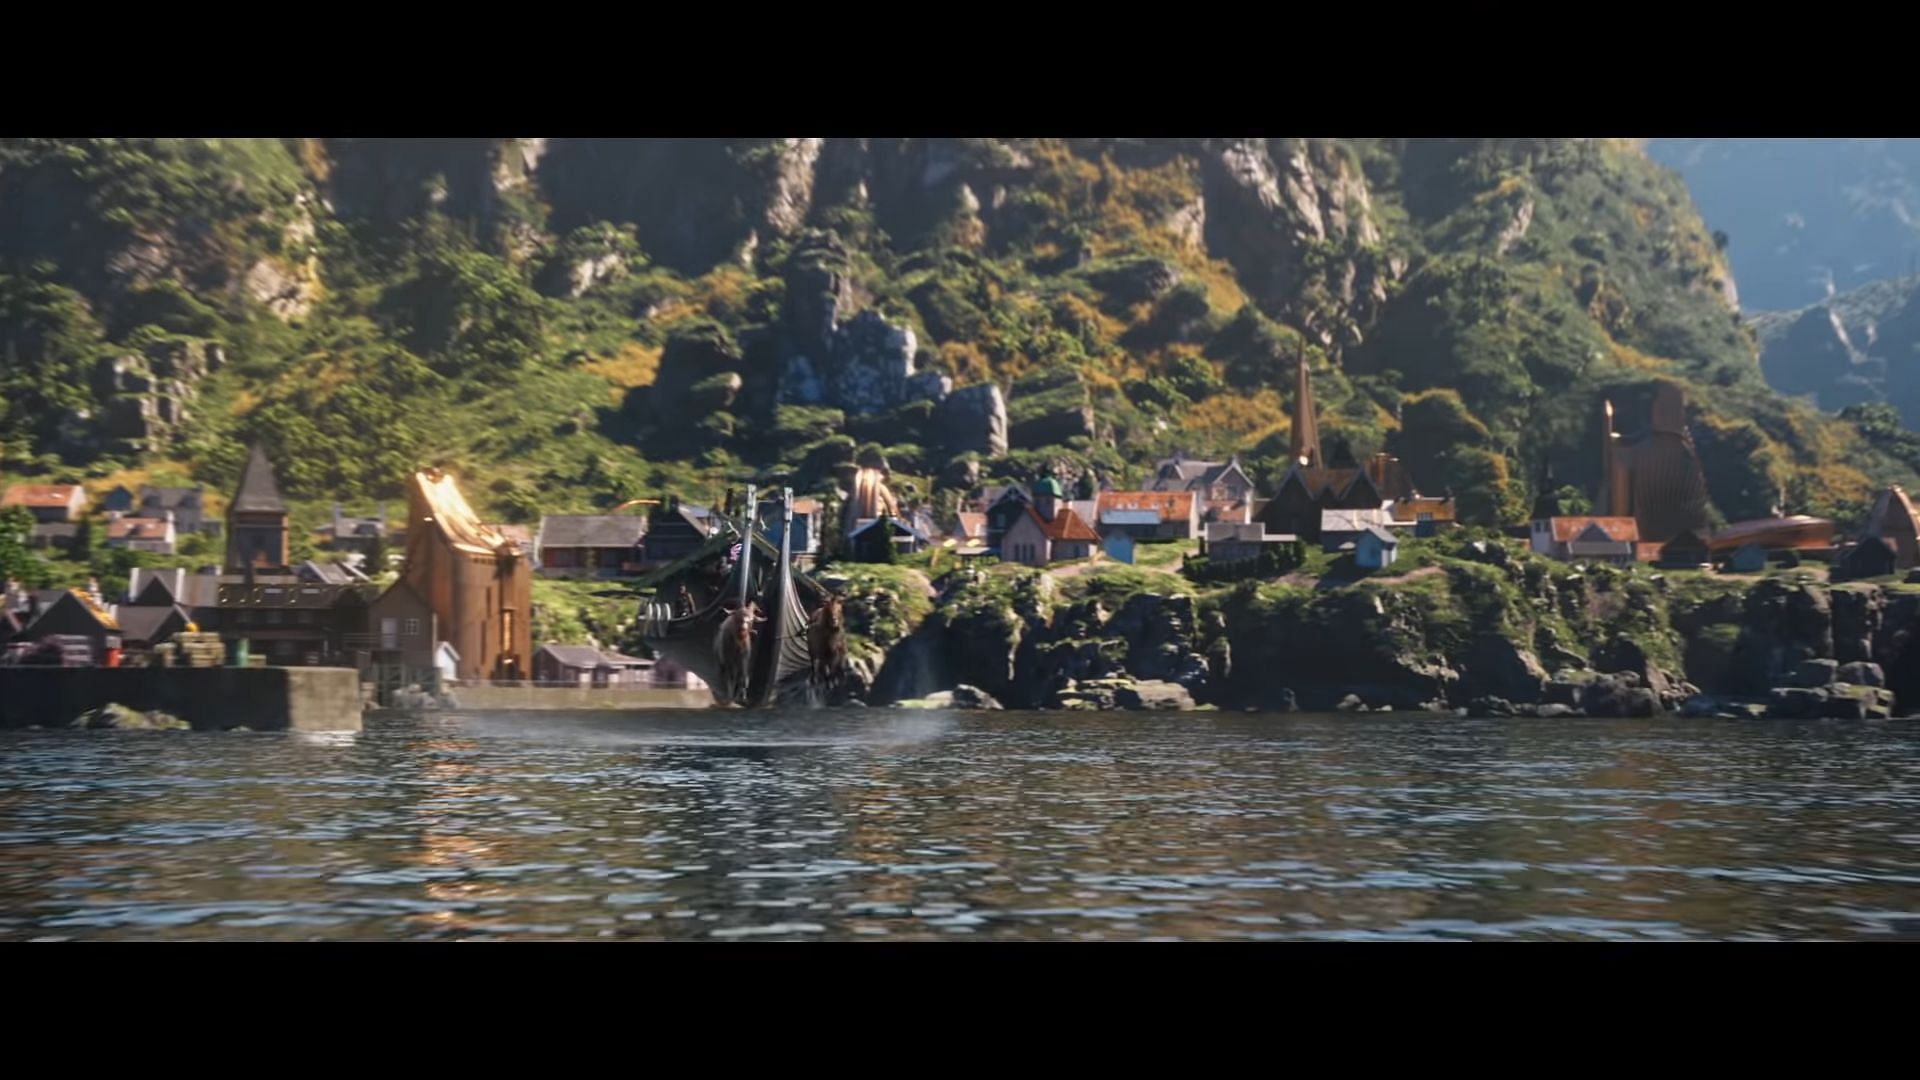 Thor's Goat Boat in the teaser (Image via Marvel Studios)